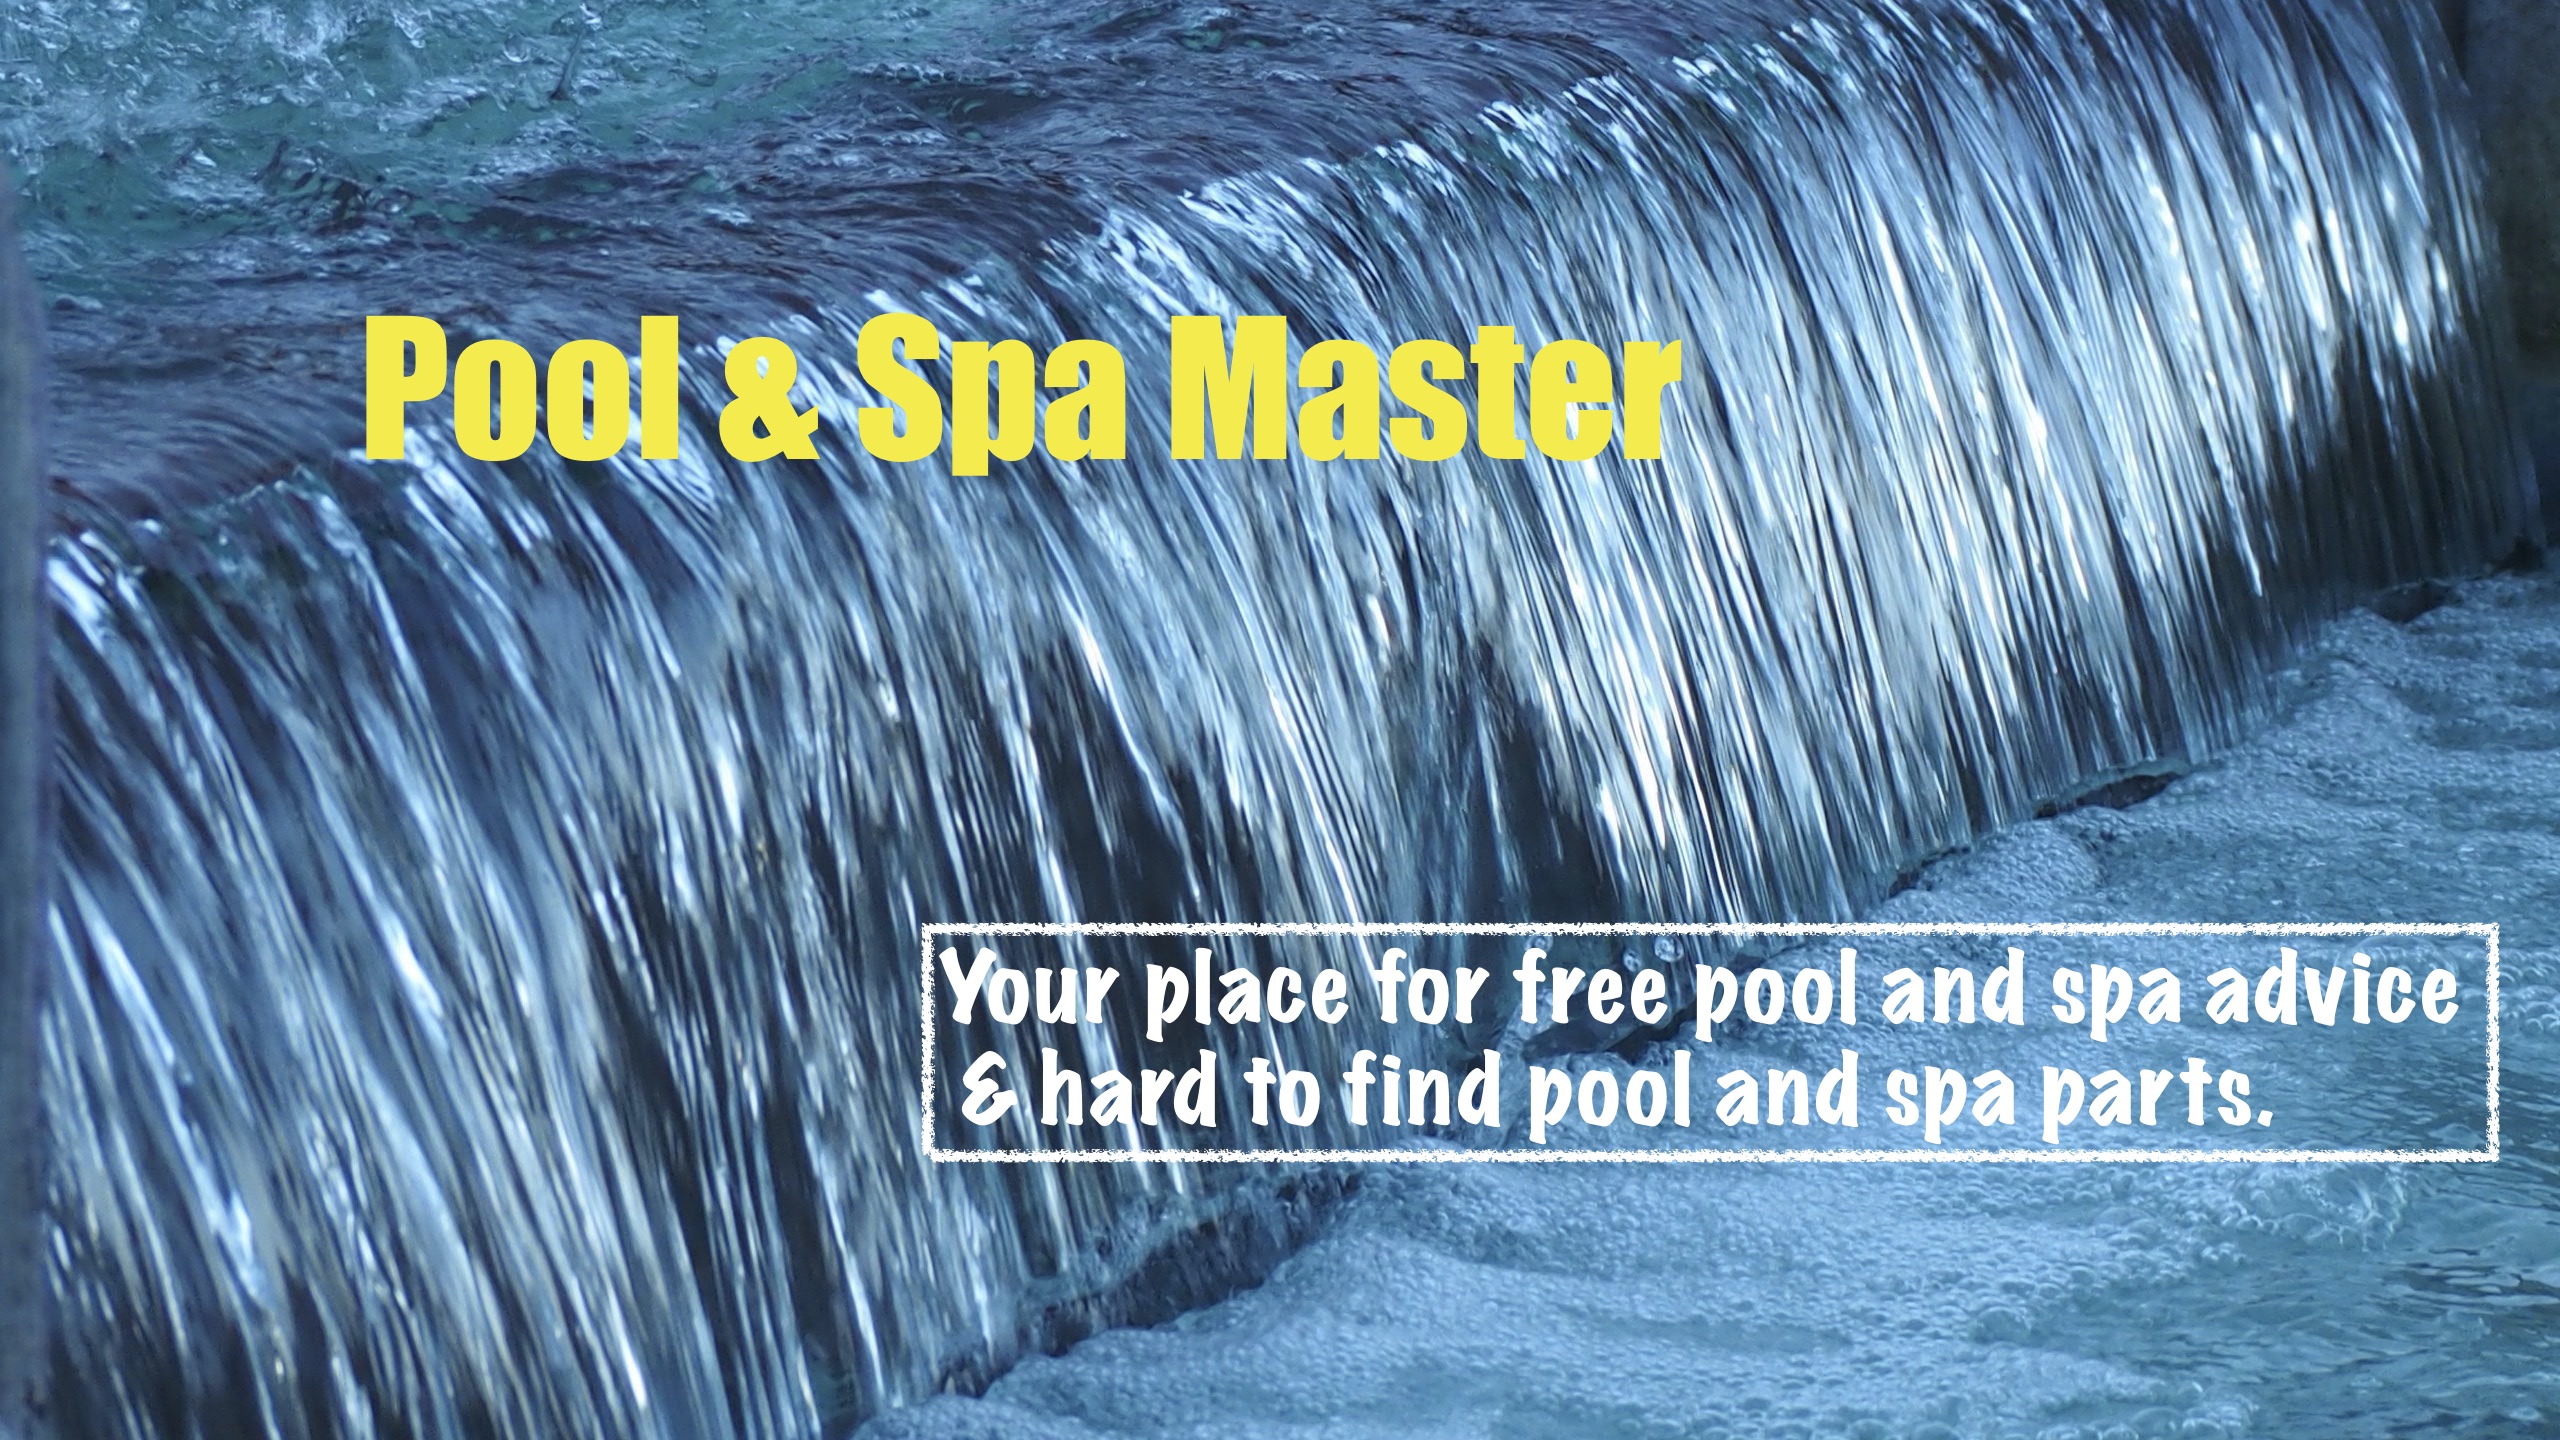 Pool & Spa Master